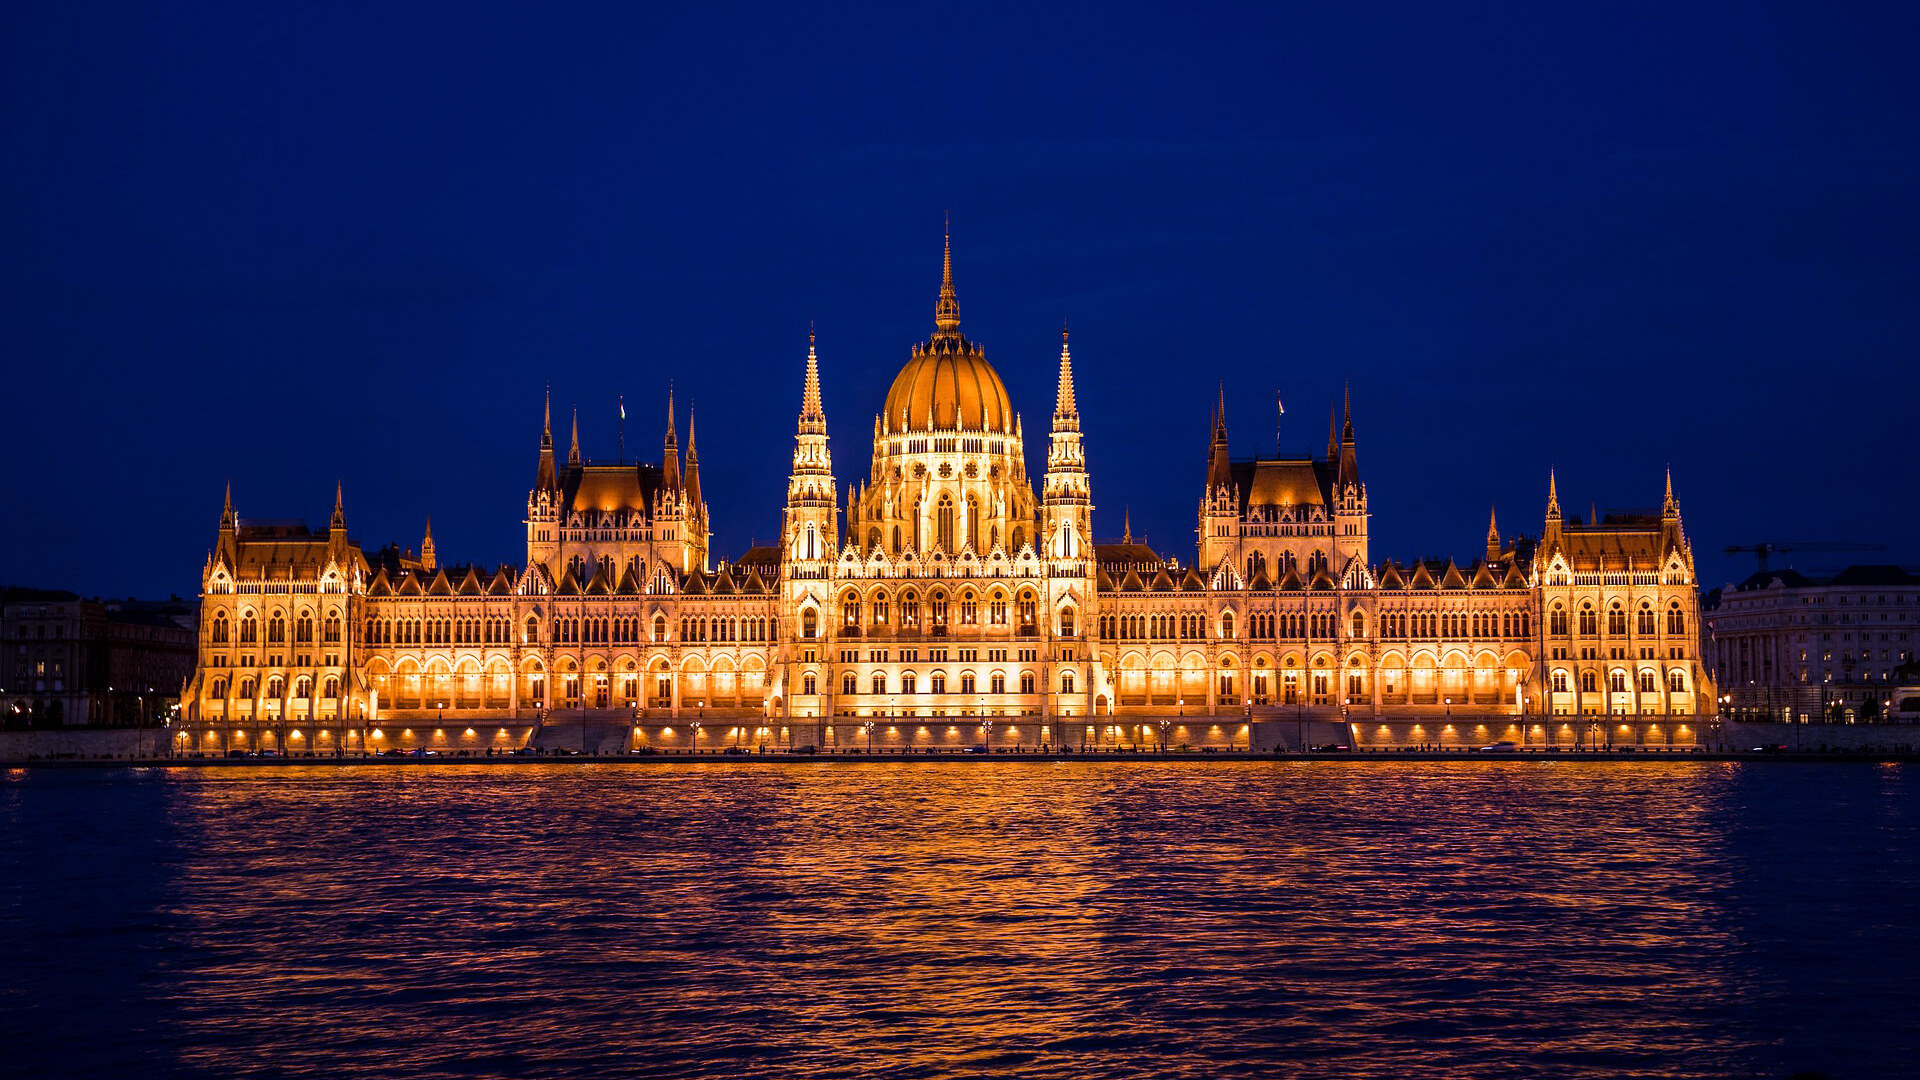 <br />
photo of the illuminated Hungarian Parliament at night